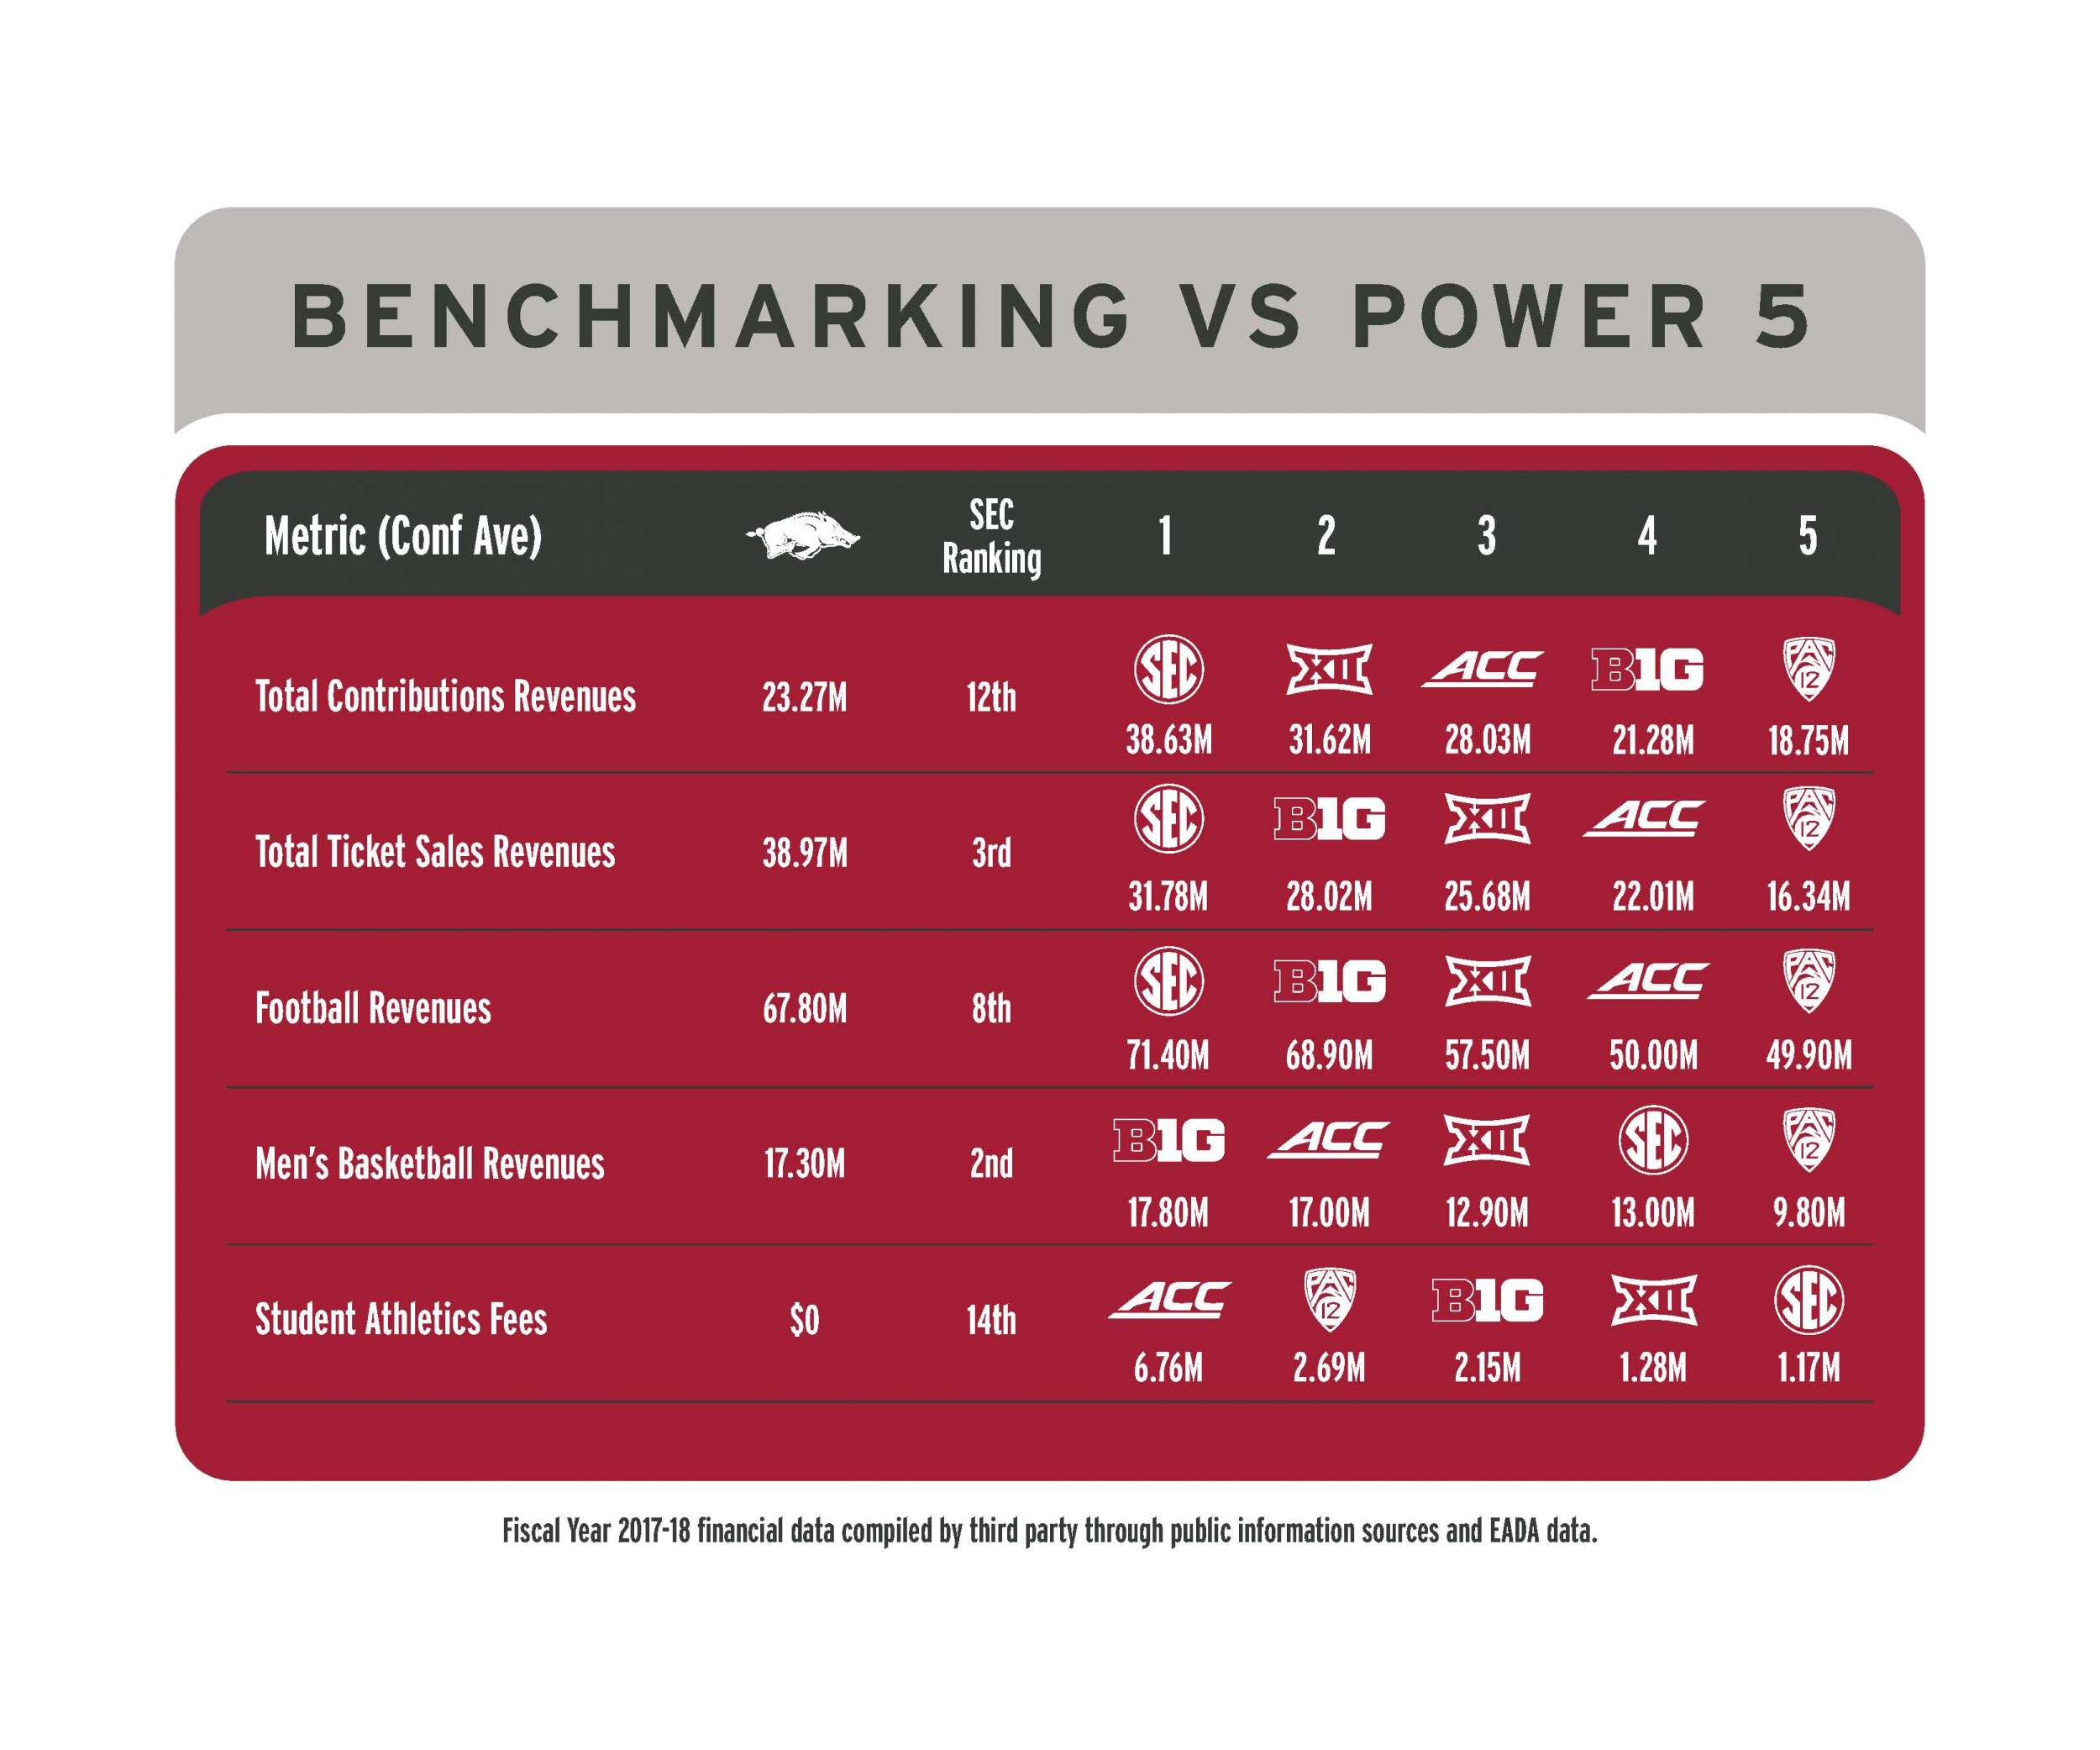 Benchmarking vs Power 5